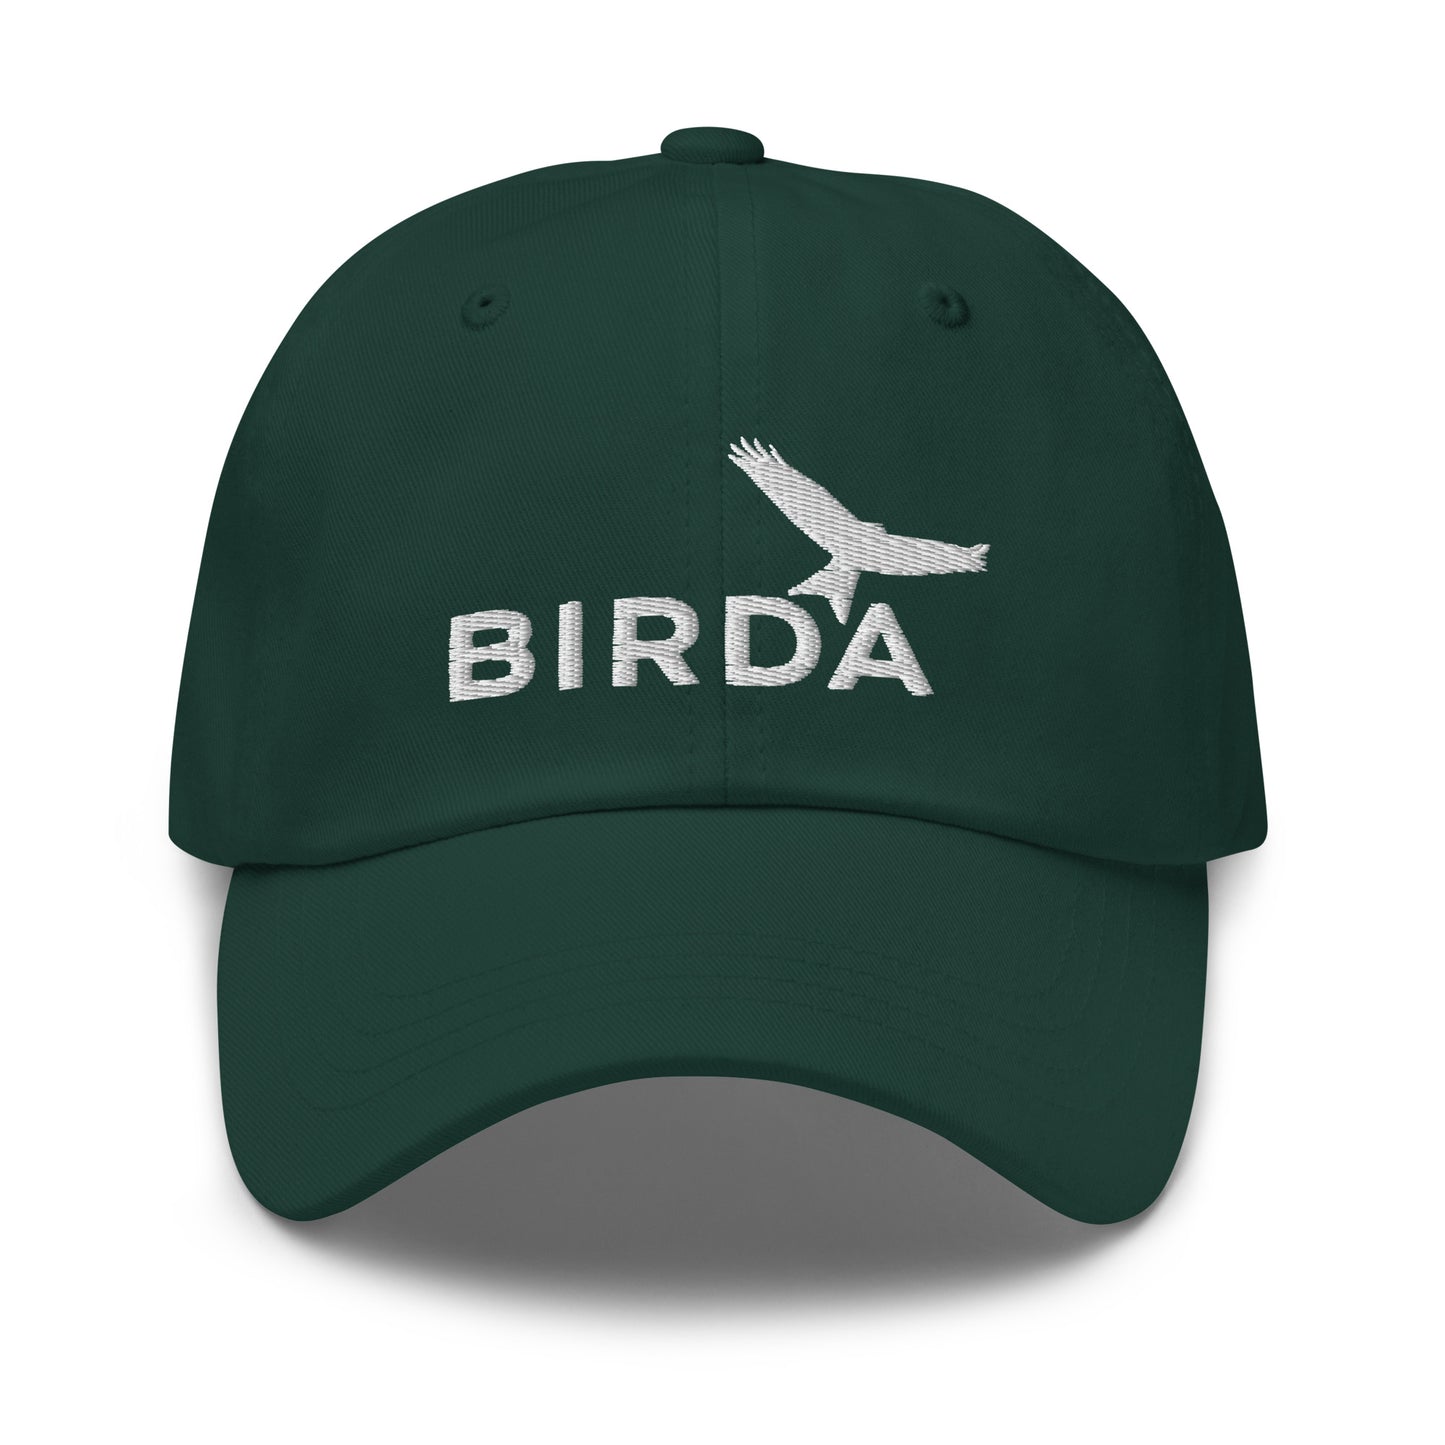 Birda bird cap - classic dad hat in spruce front